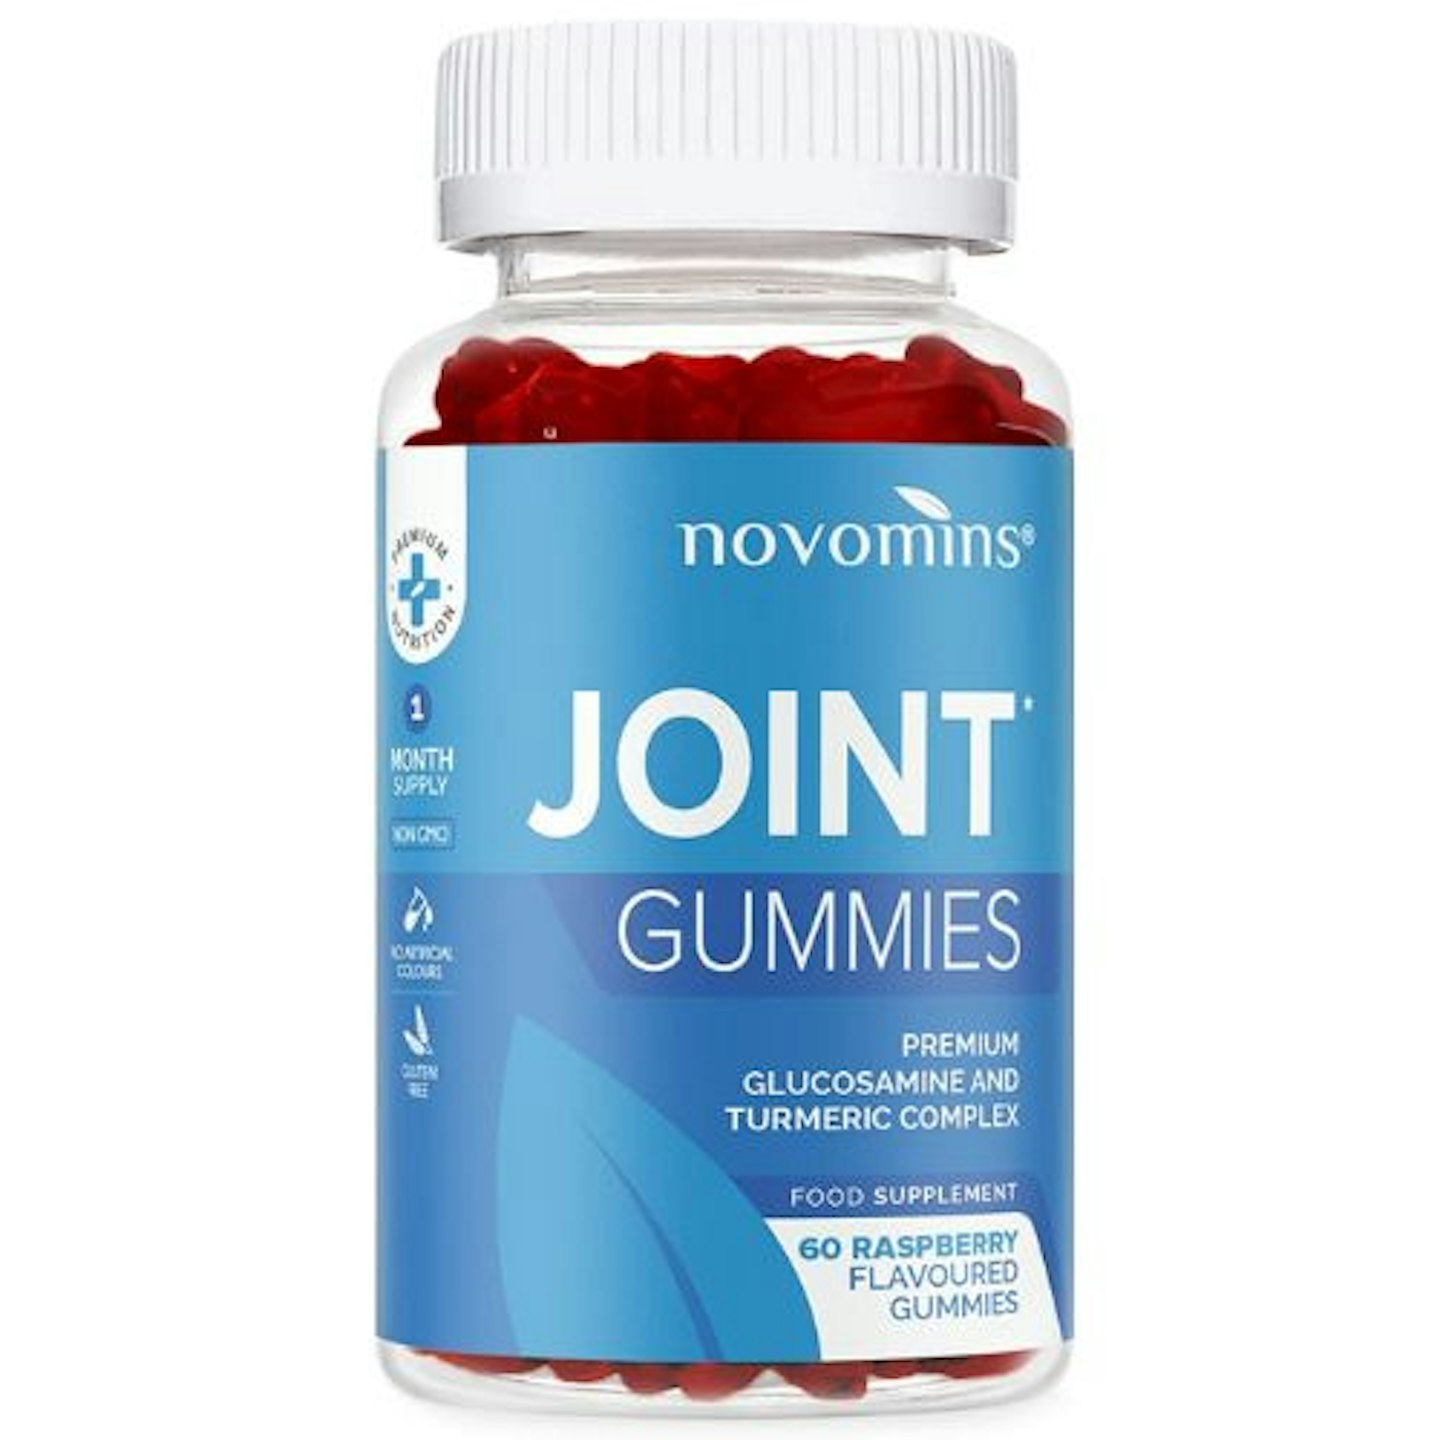 Novomins Joint Gummies